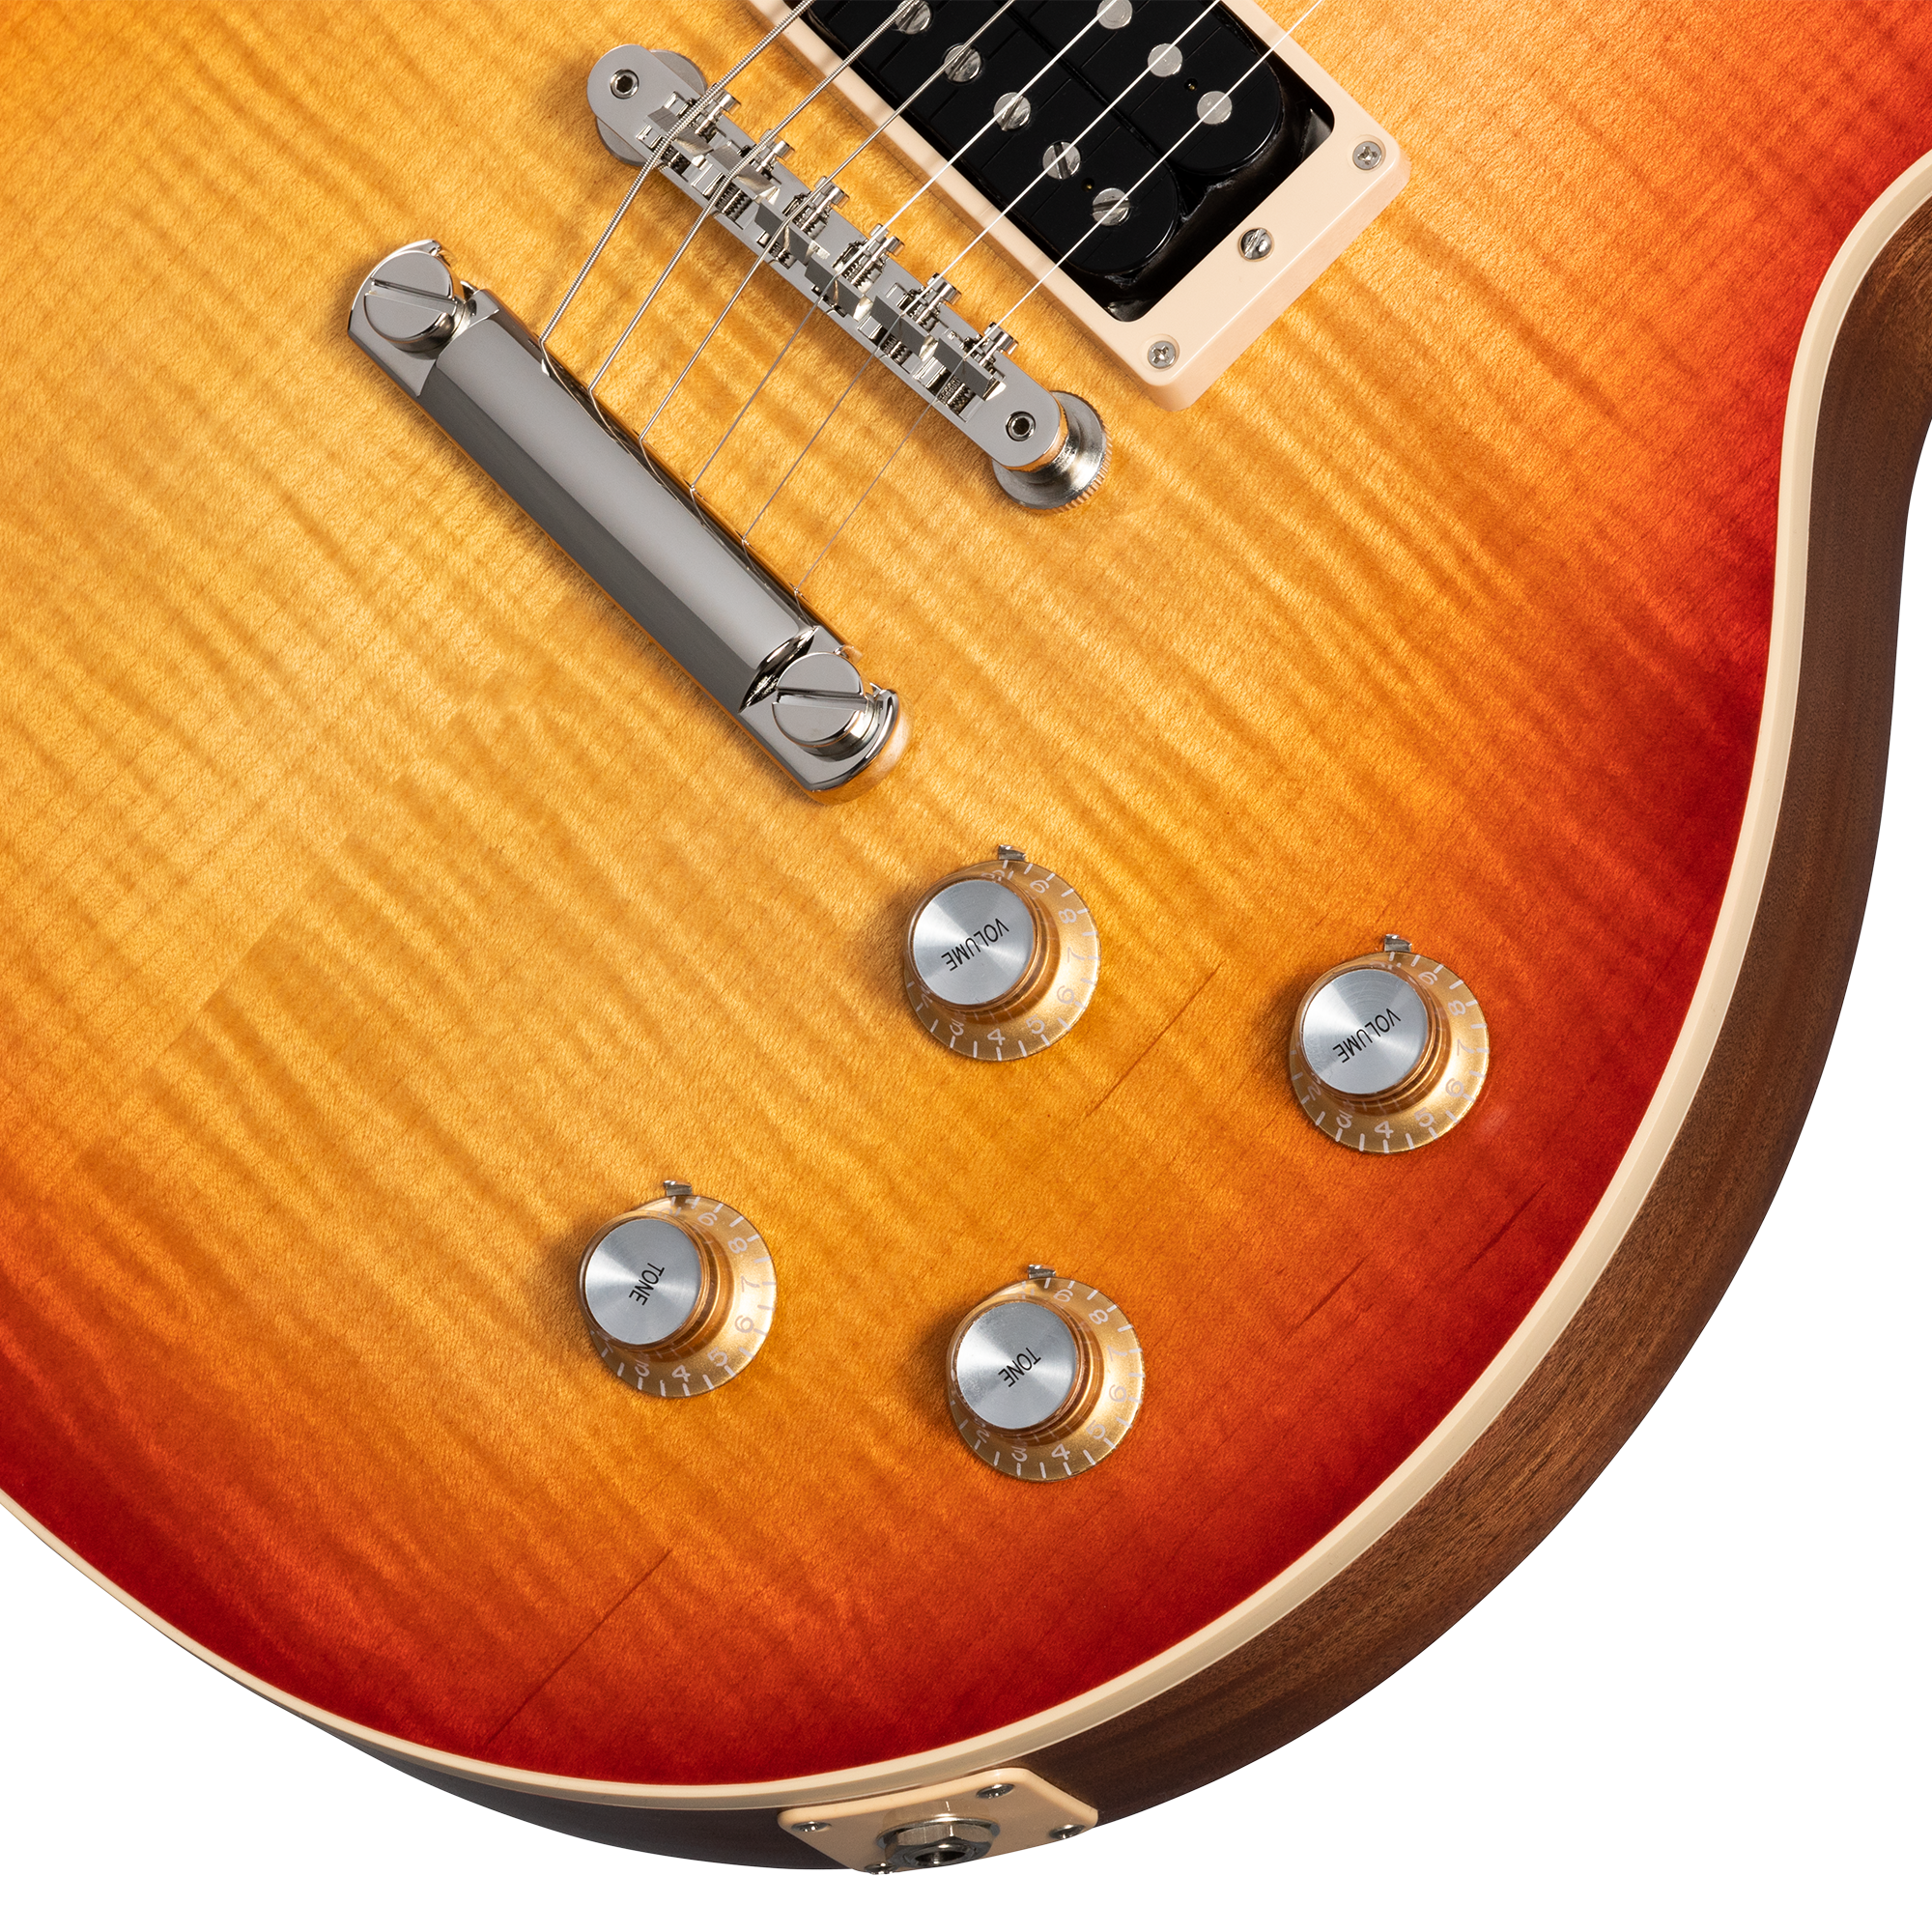 Gibson Gibson Les Paul Standard 60s Faded (Vintage Cherry Sunburst) 